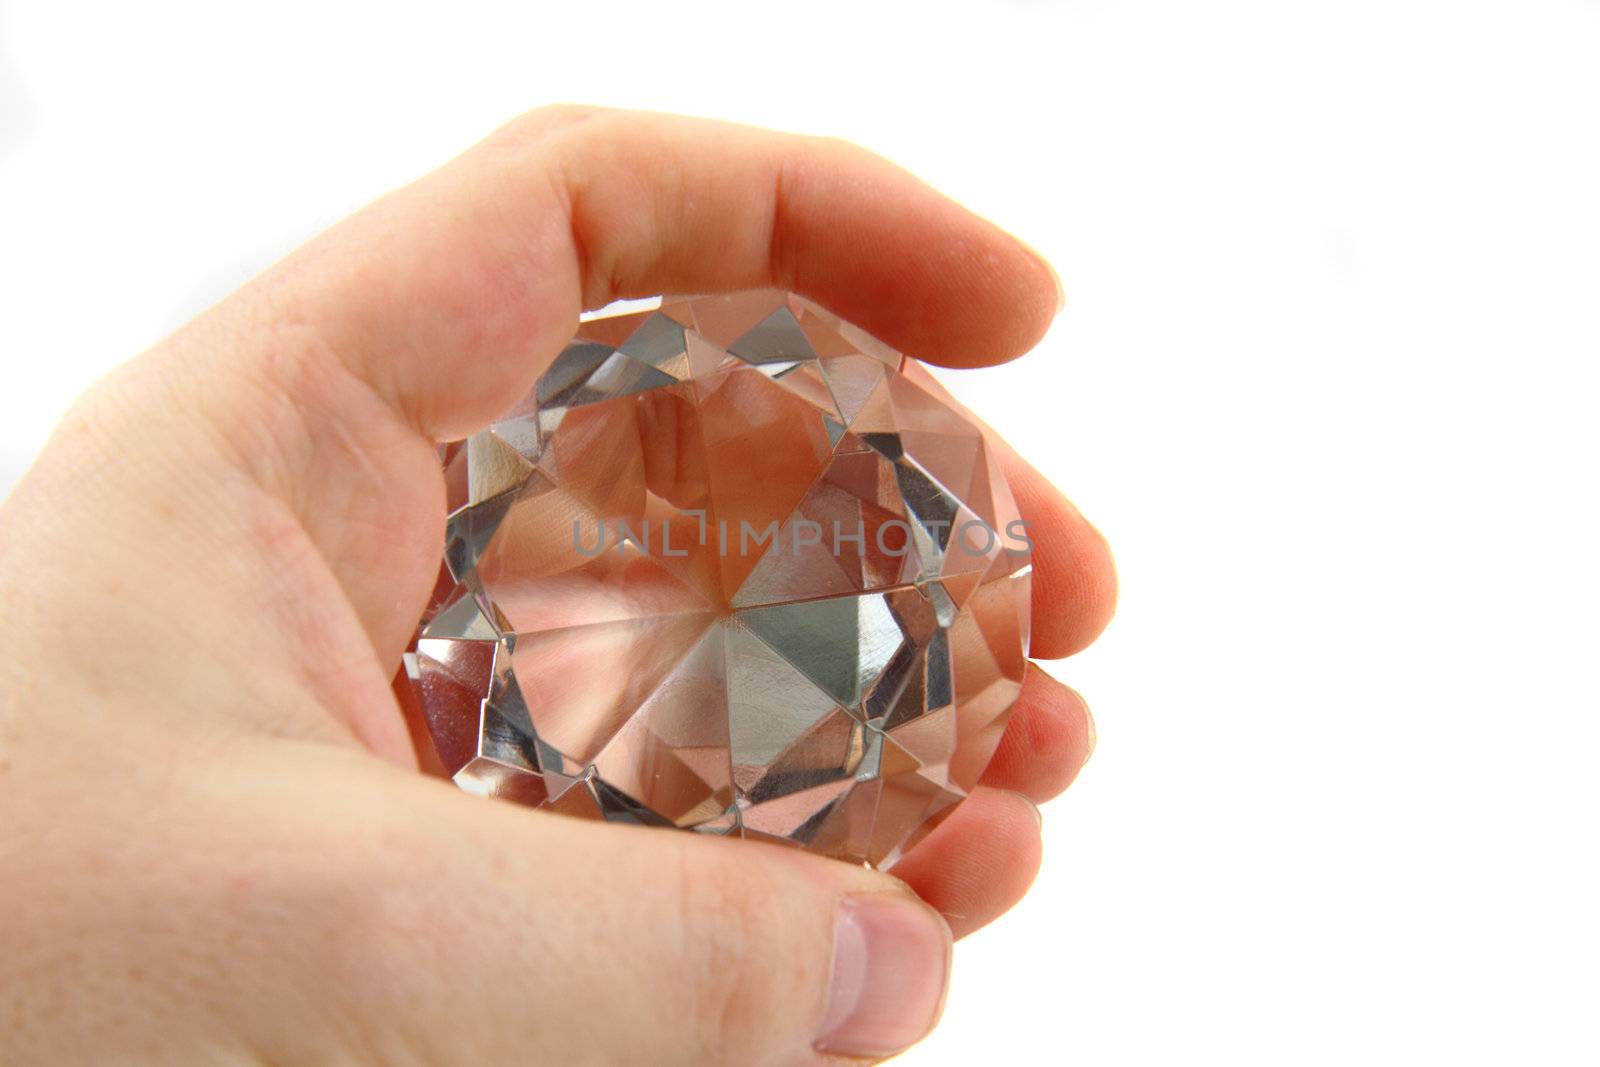 diamond in the hand  by jonnysek